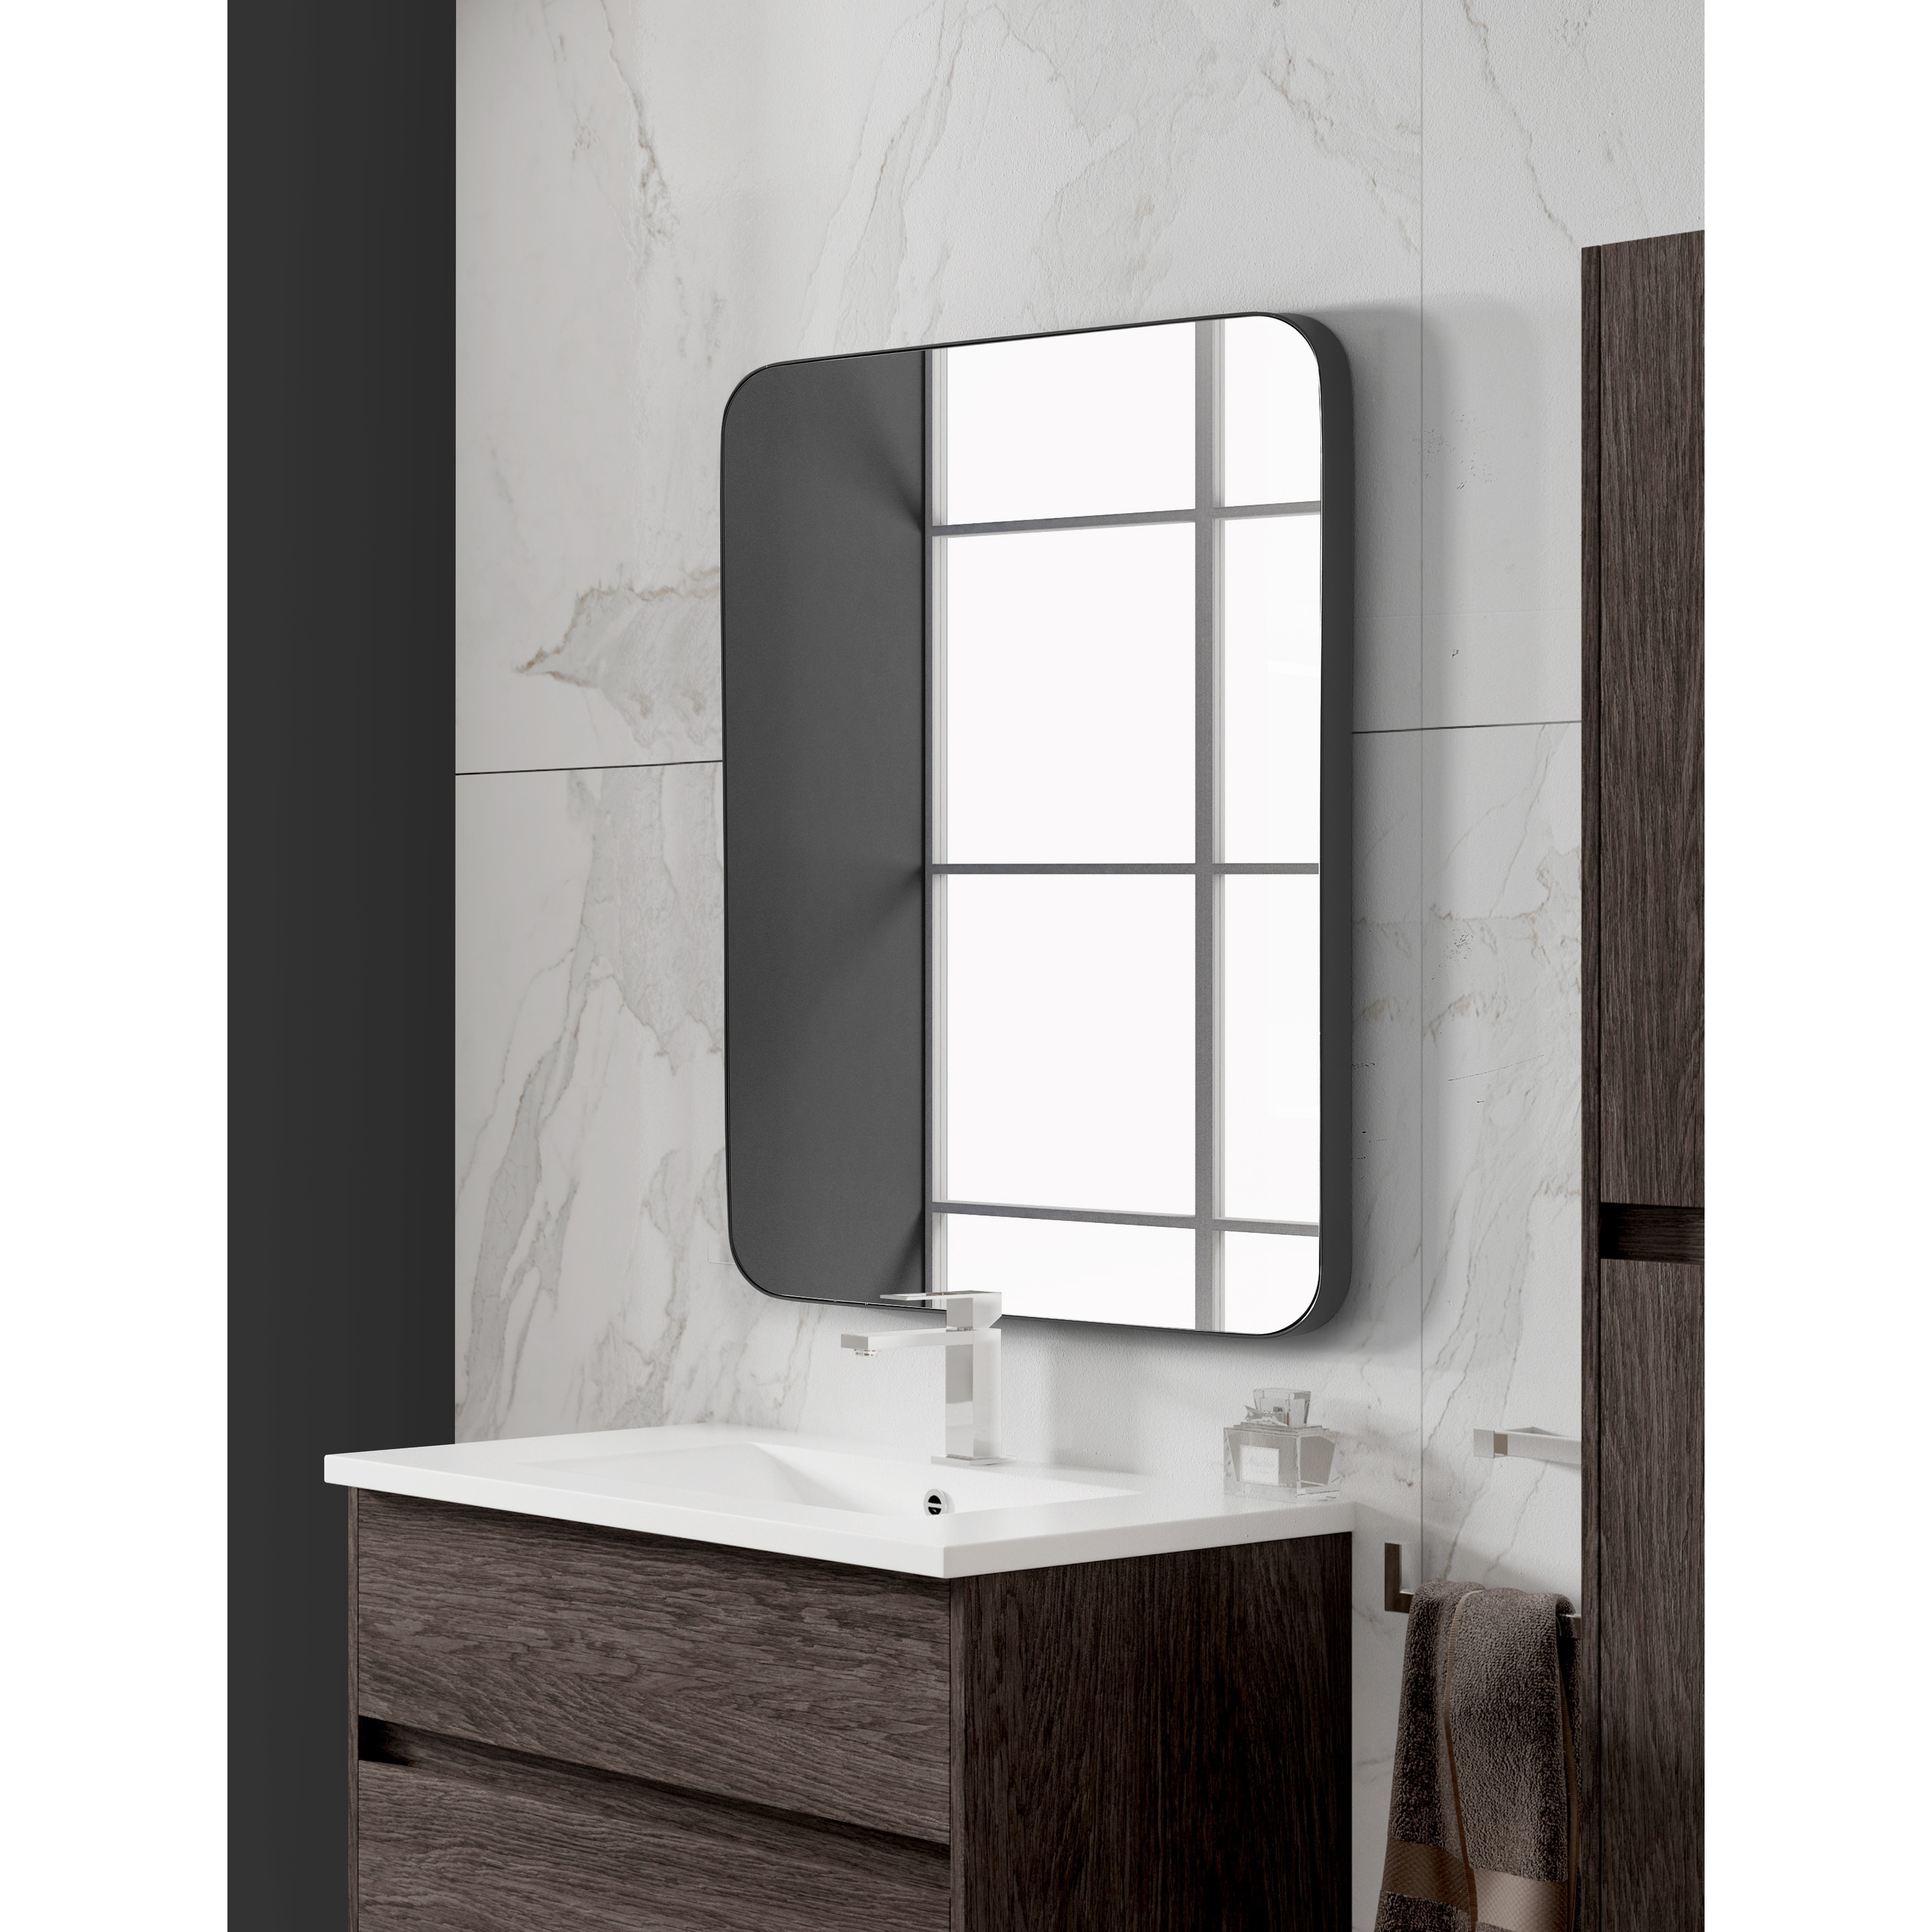 SUMMER STAR Black Large Flat Wall and Bathroom Mirror 24x36 On Sale  Bed Bath  Beyond 34013450